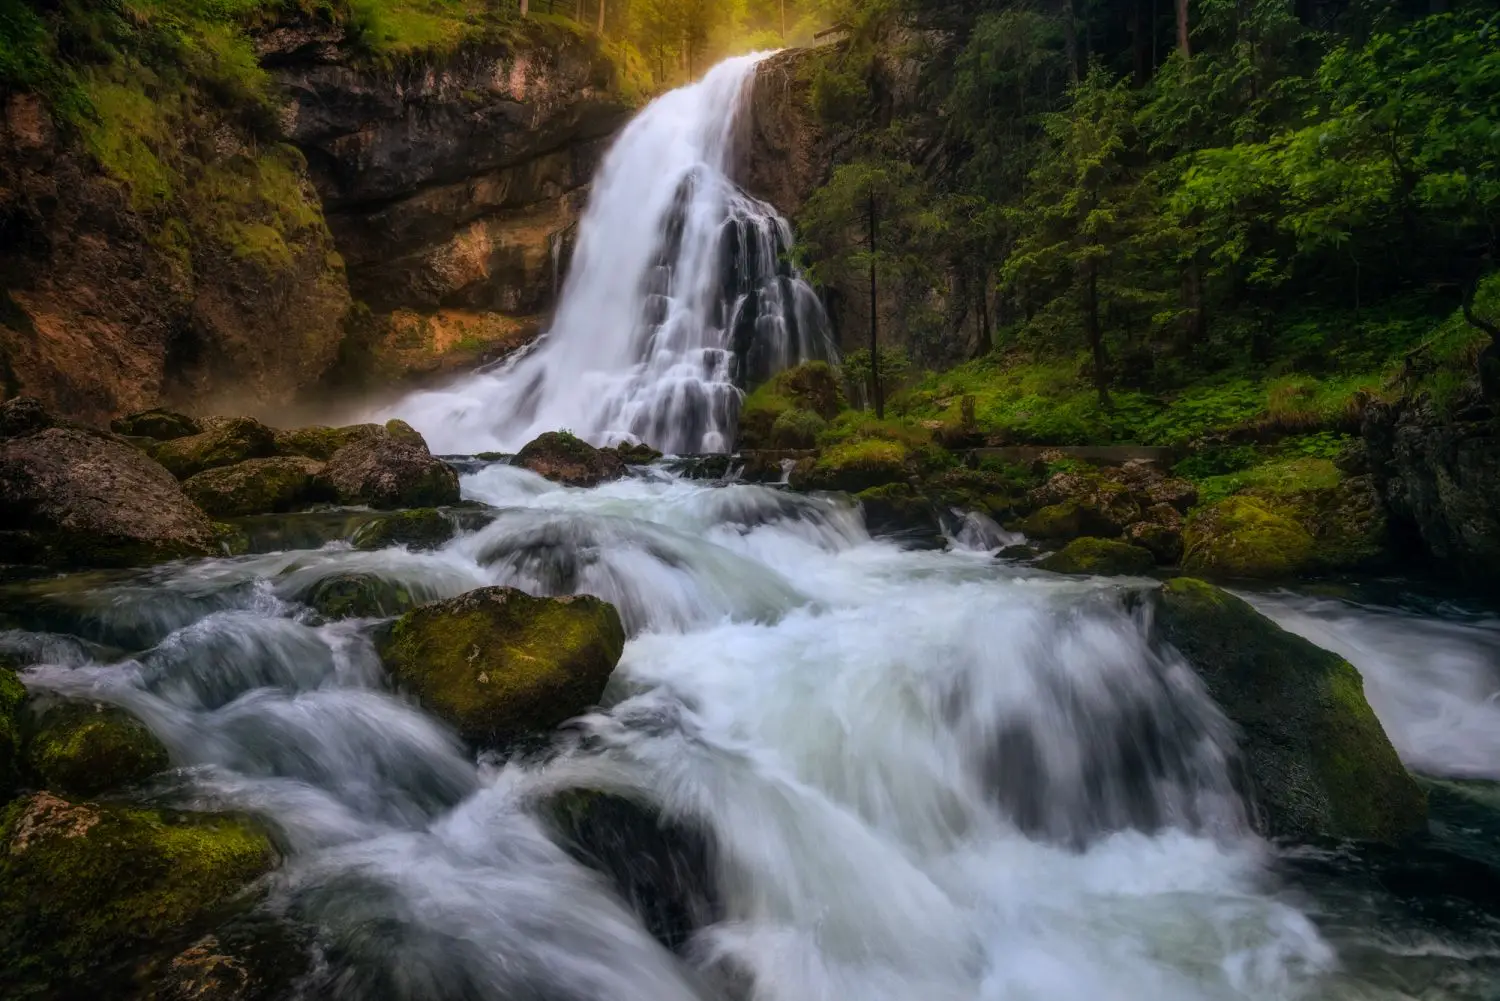 Fototapete Wasserfall